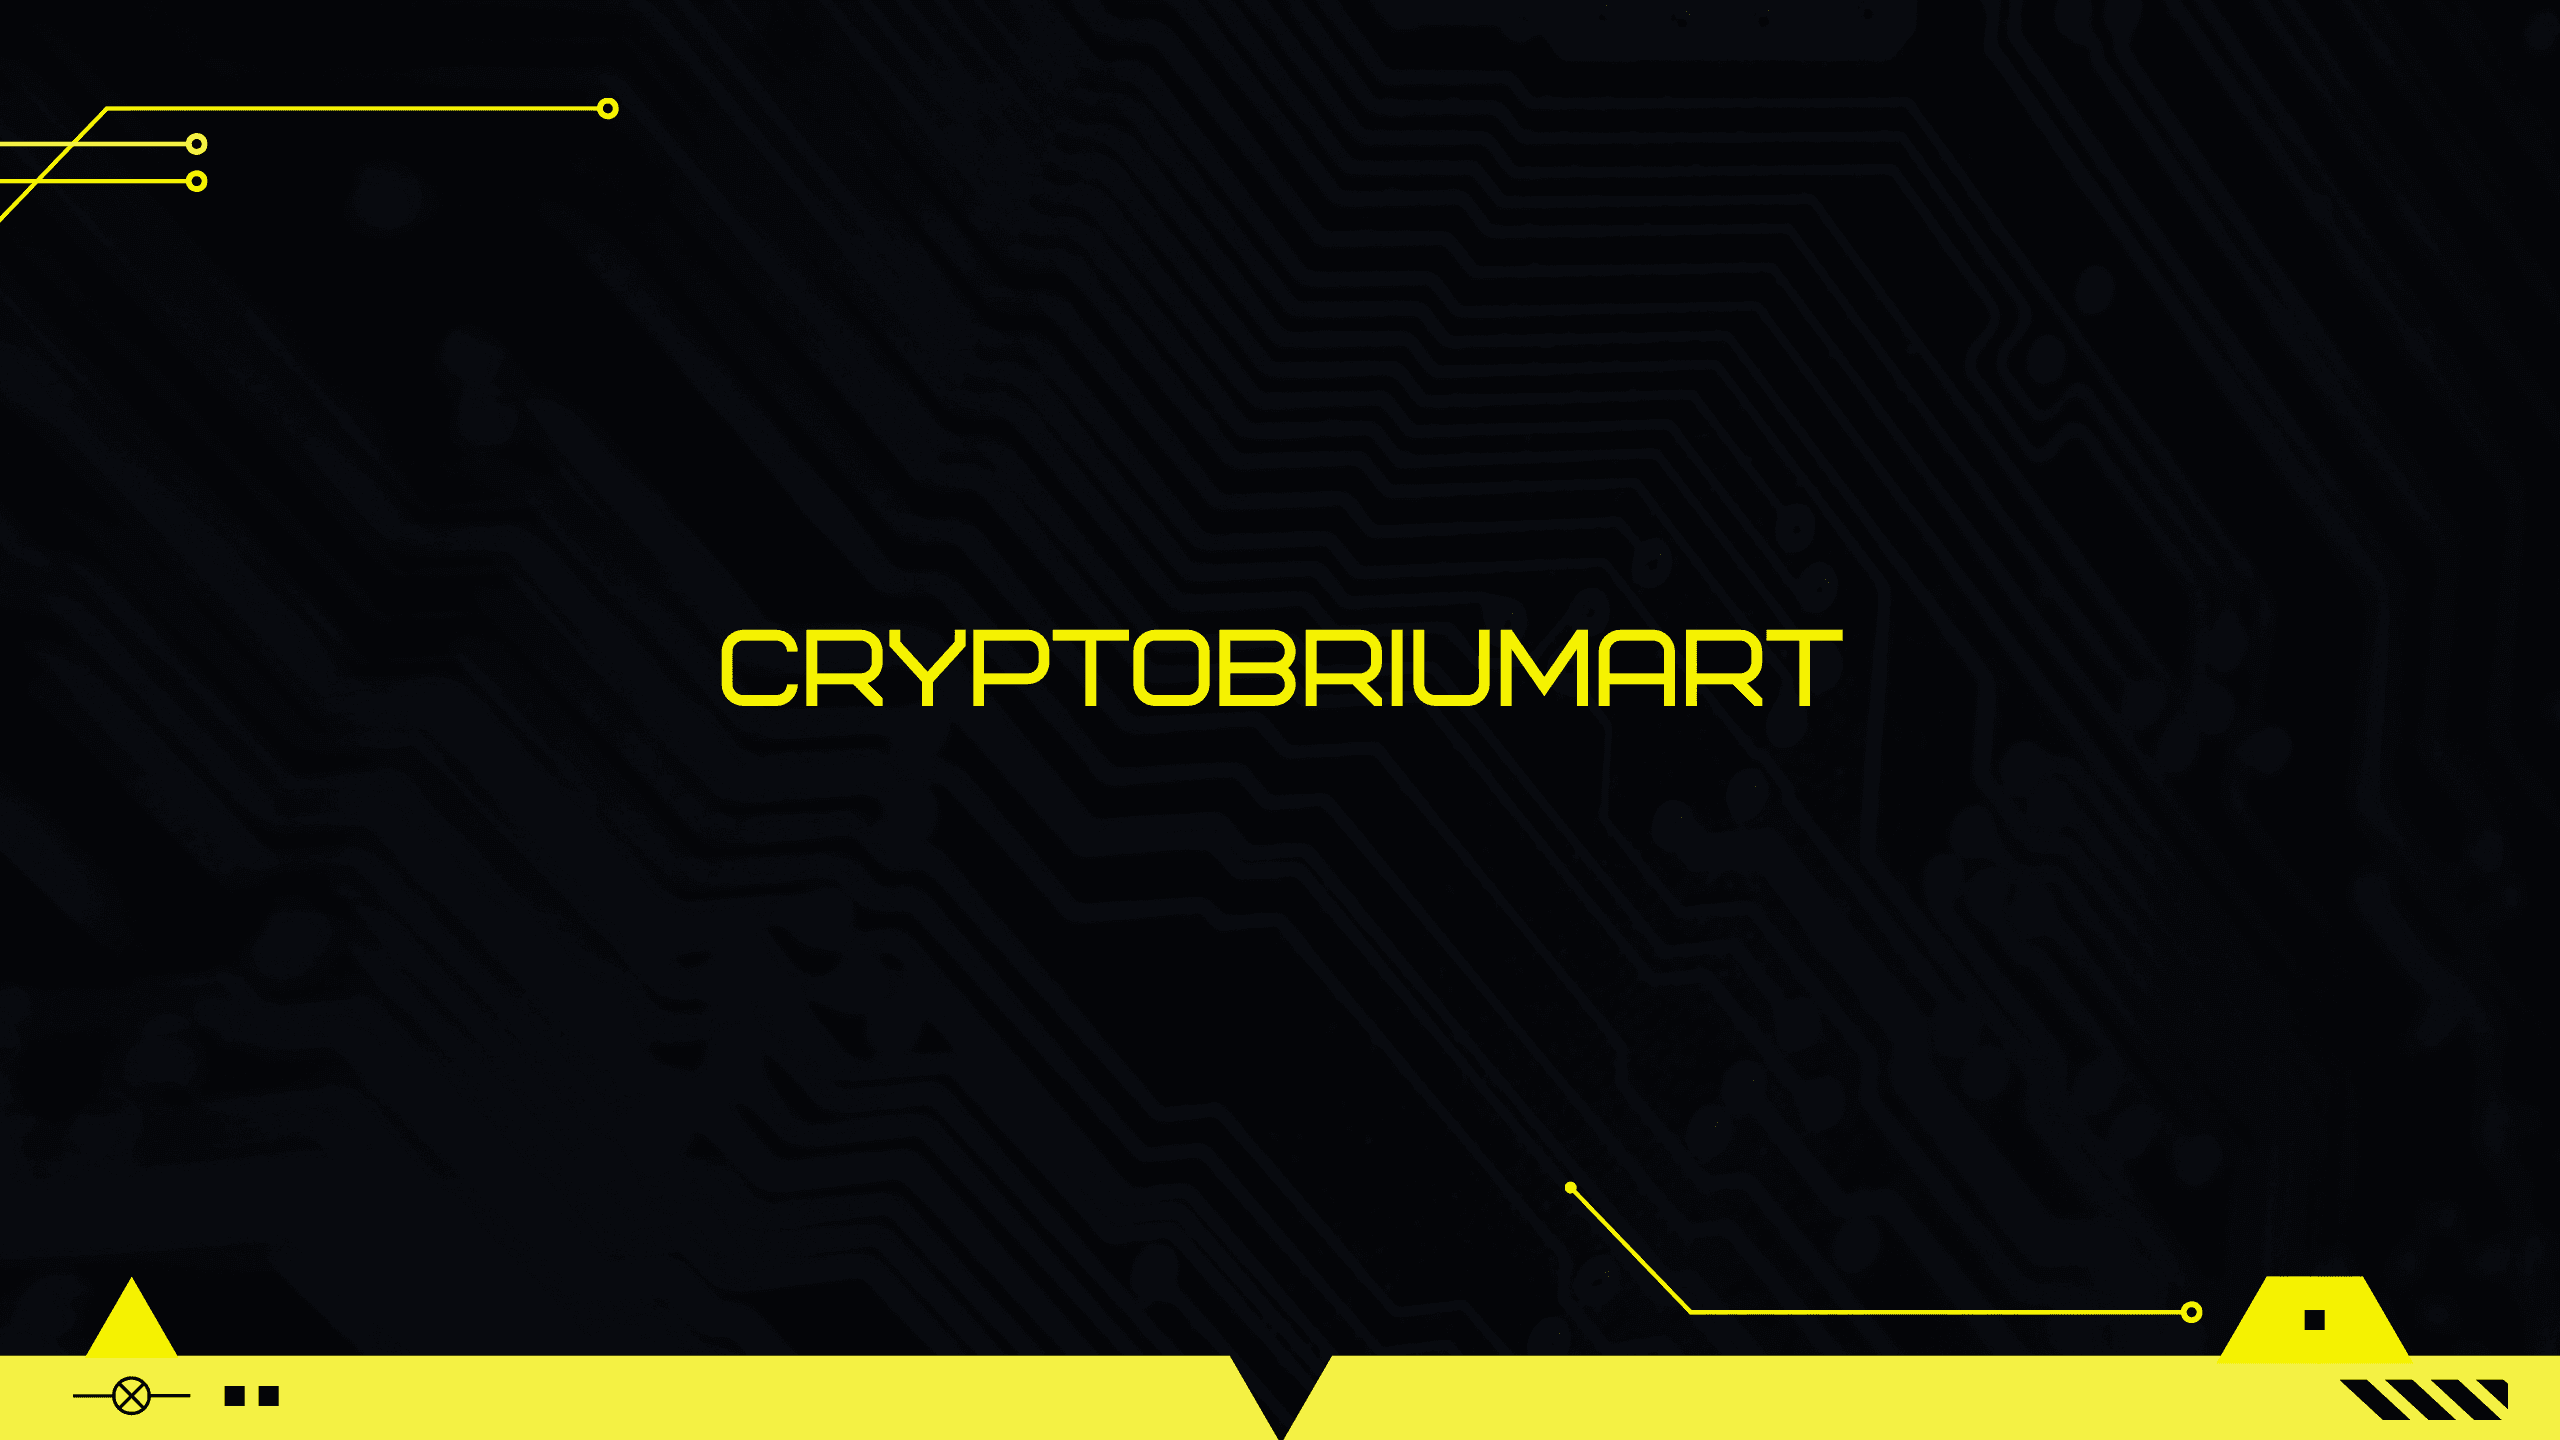 CryptobriumArt 橫幅